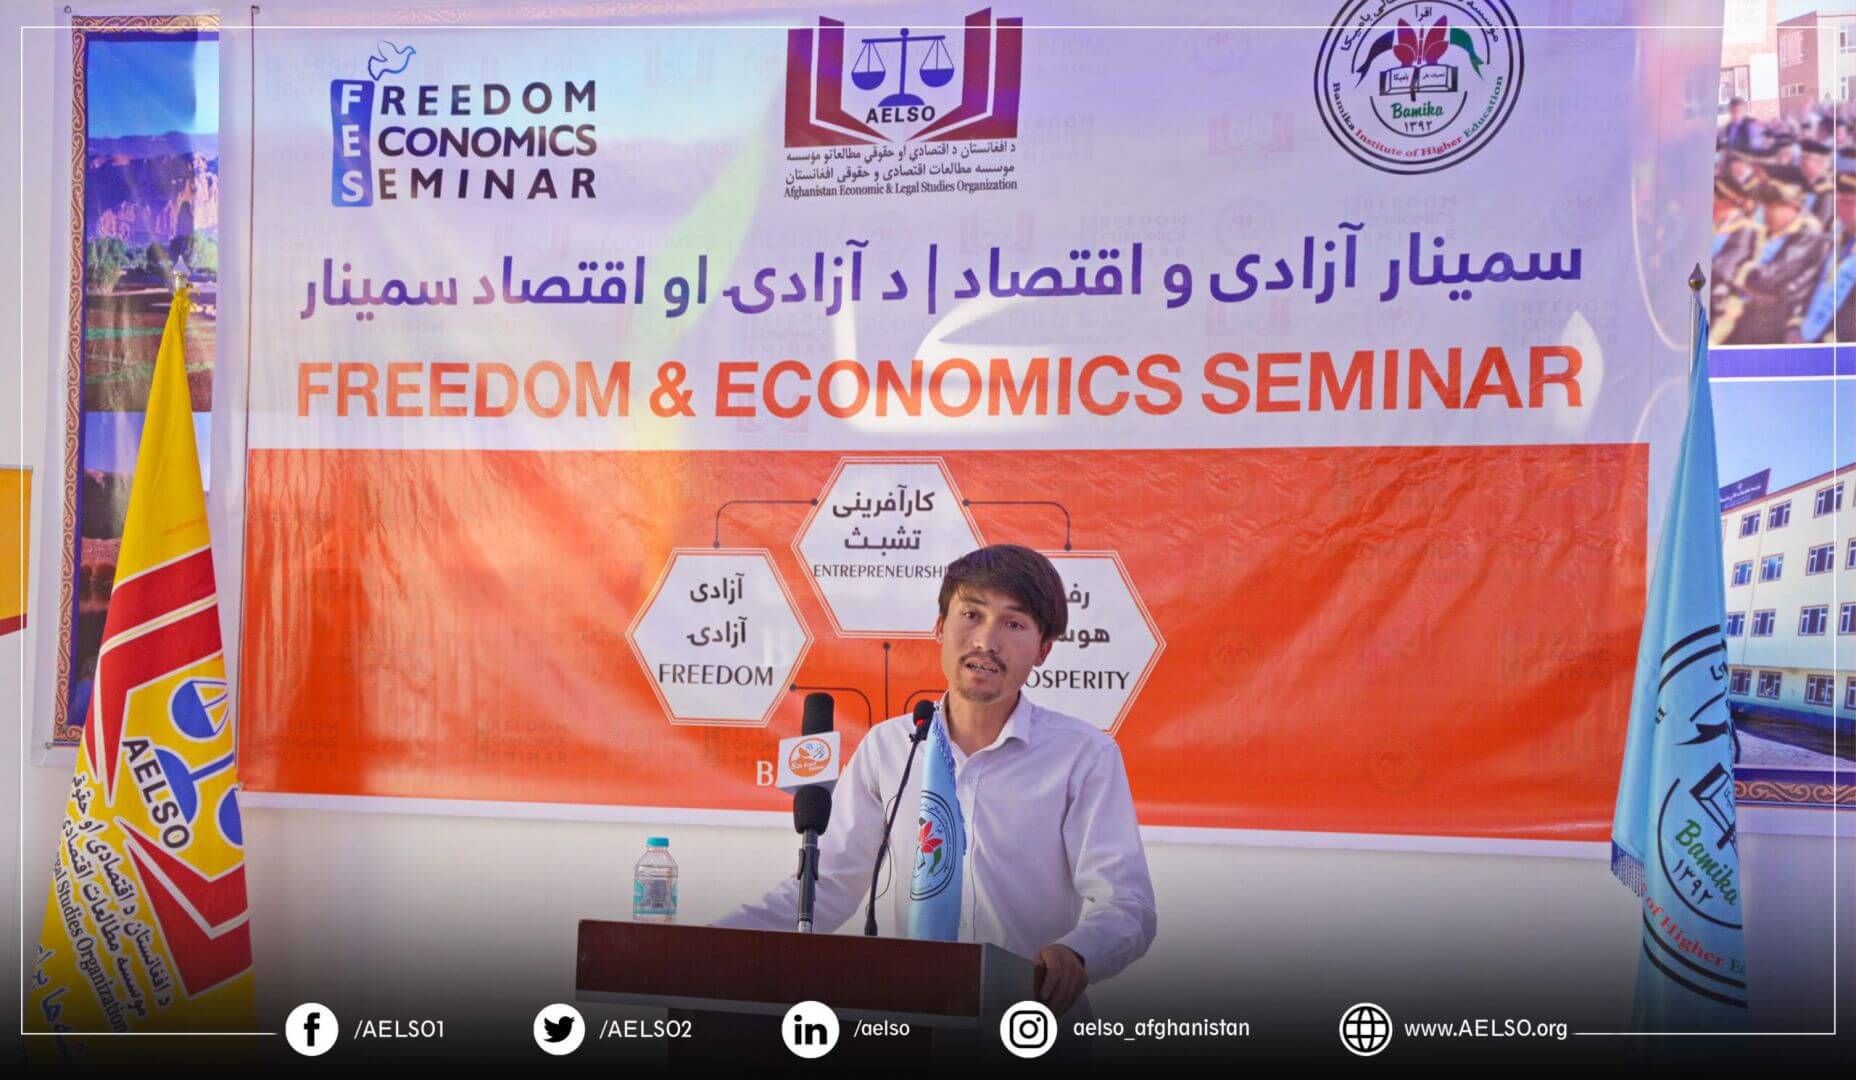 Mohammad Ali Durabi; participant of Freedom & Economics Seminar